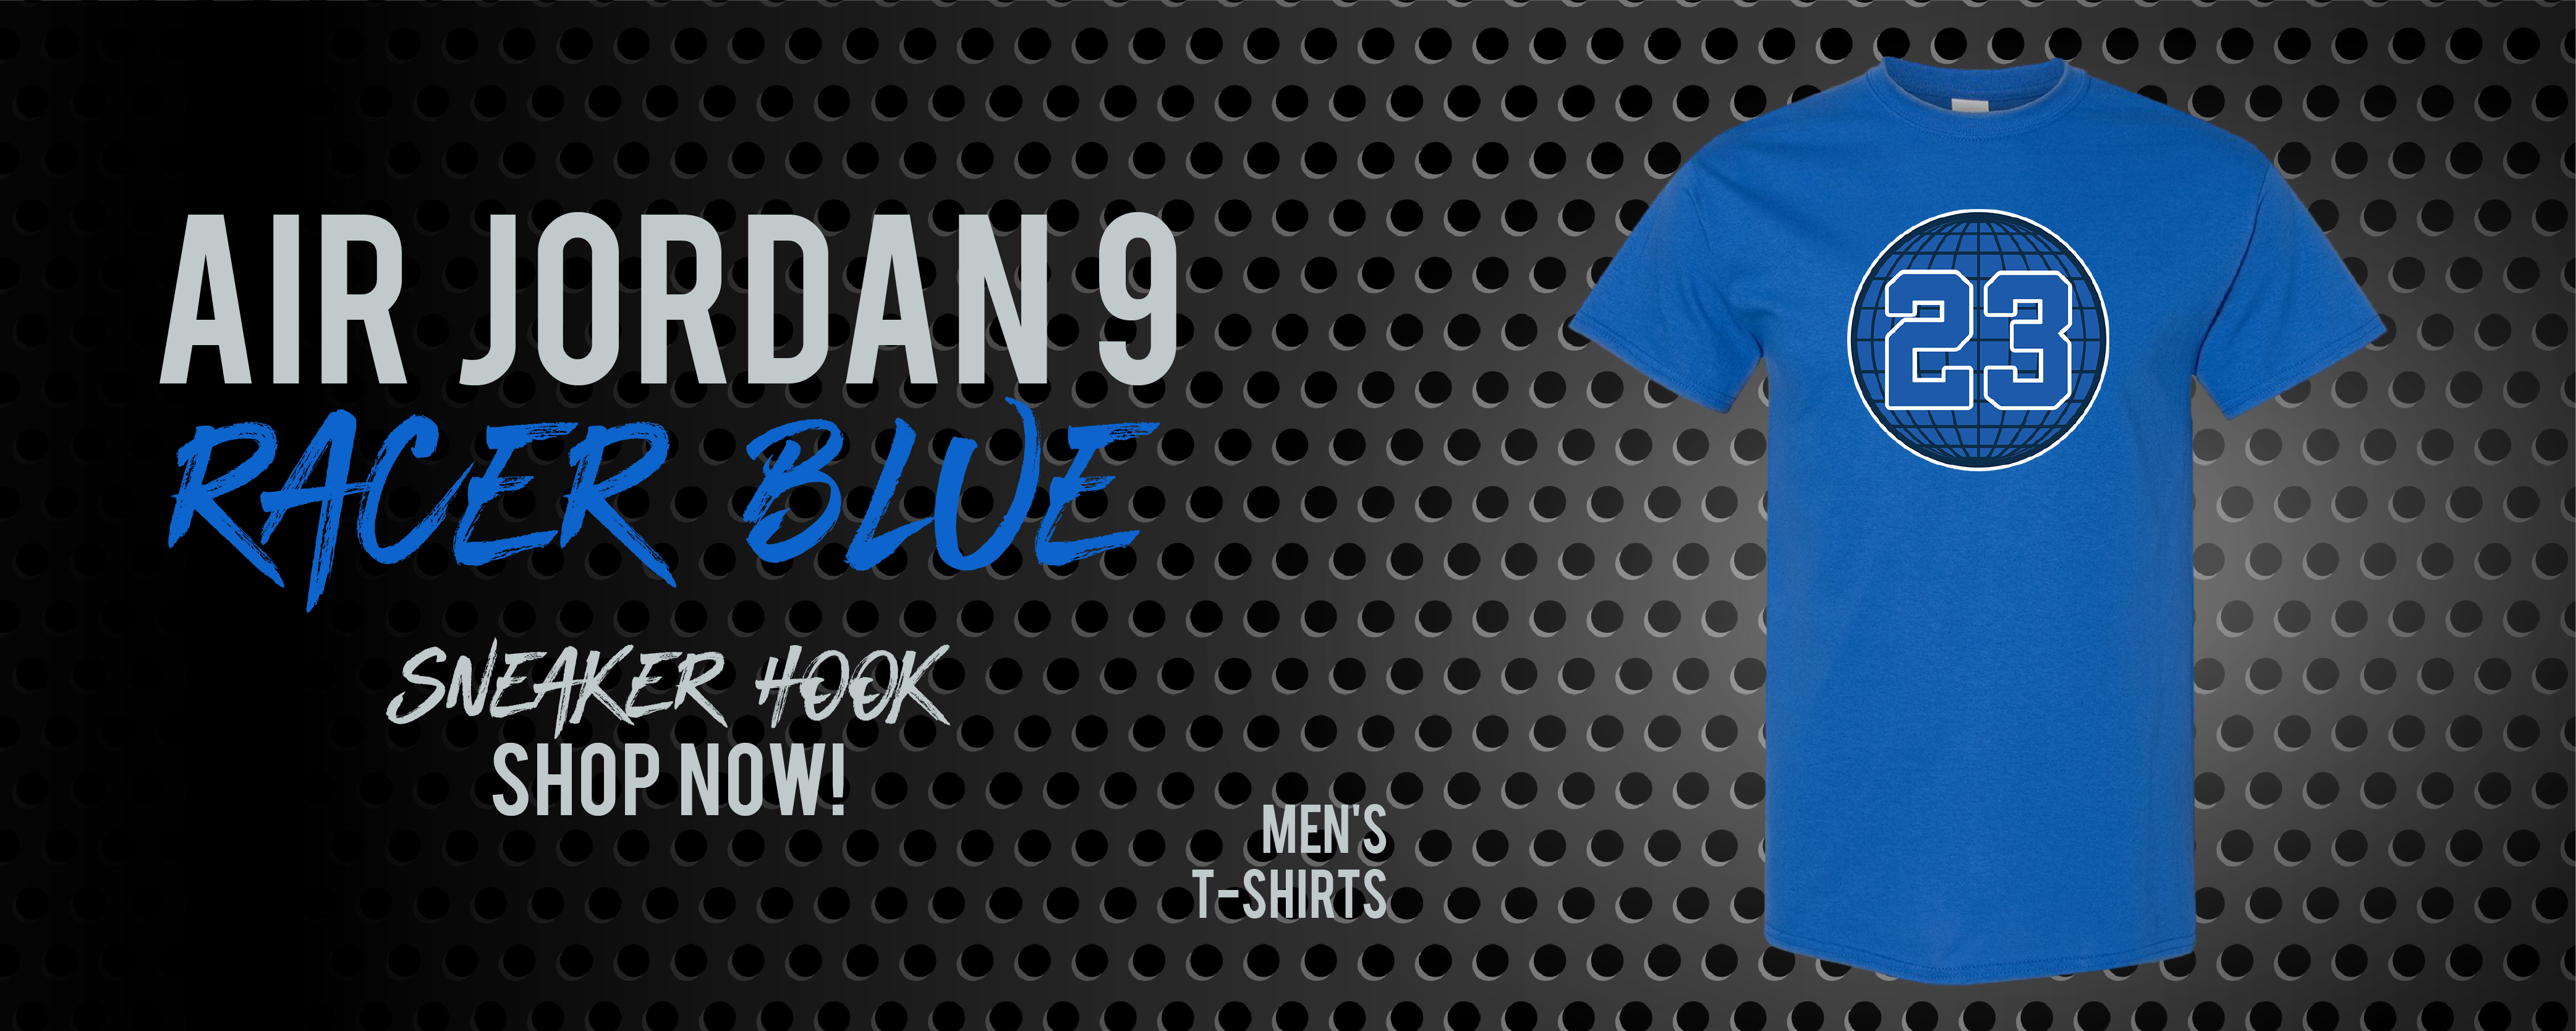 shirts to match jordan retro 9 racer blue